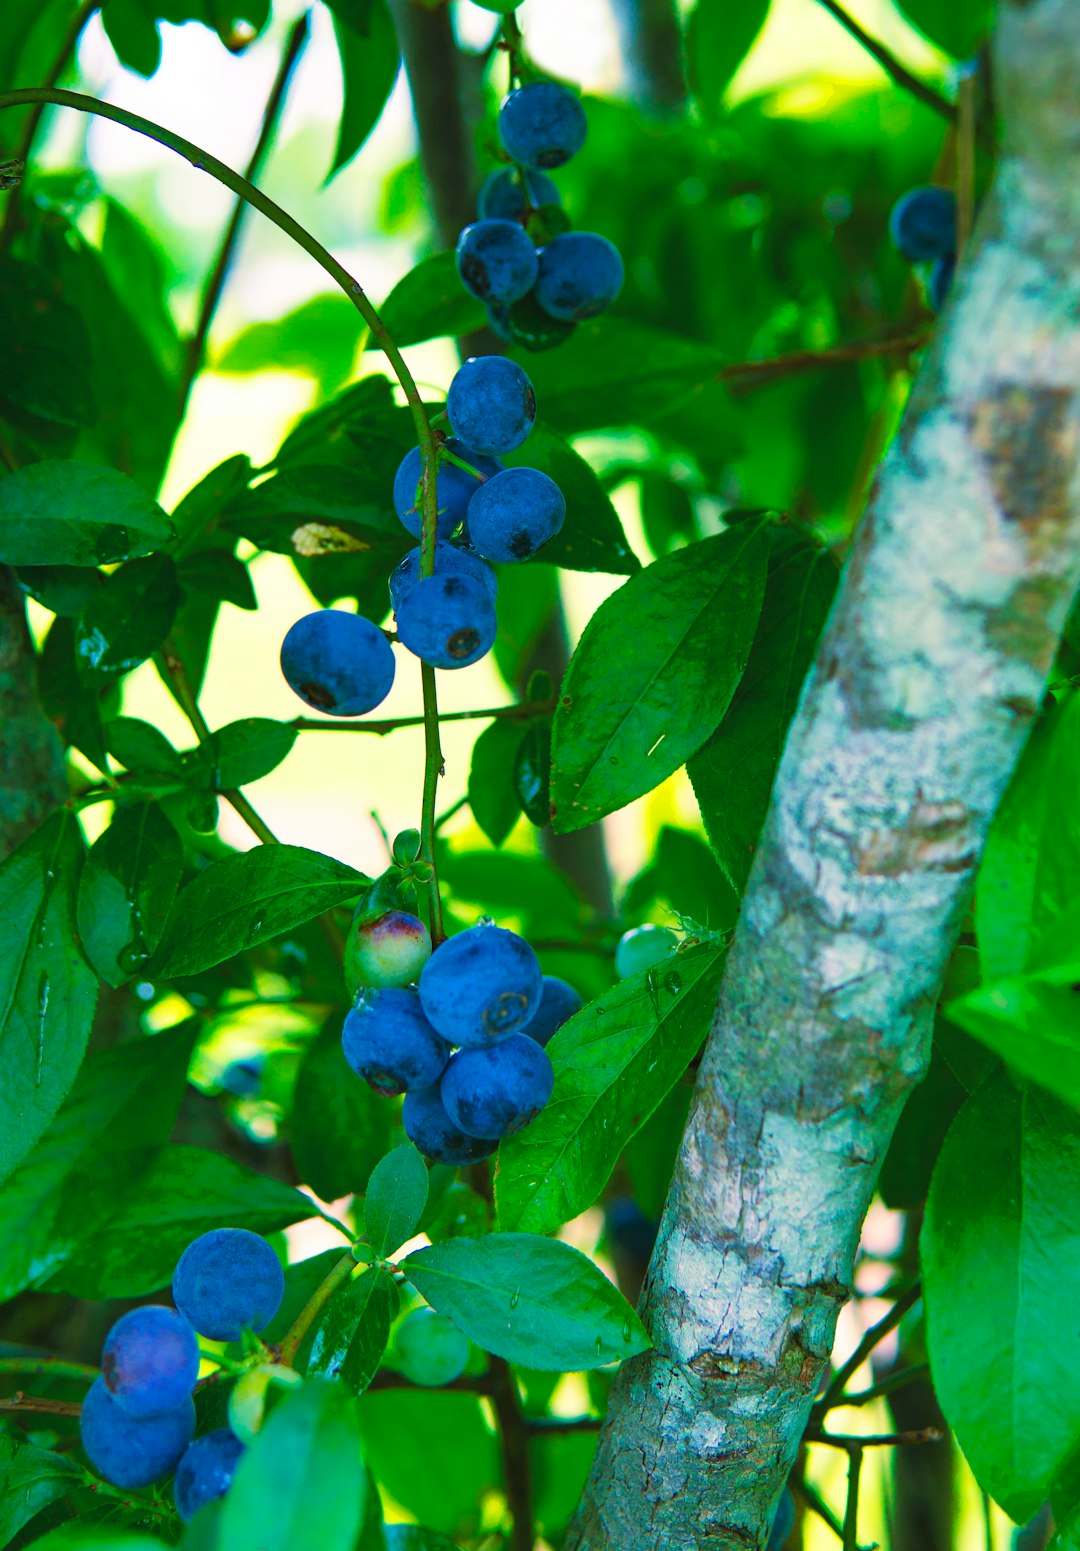 blue round fruits on tree